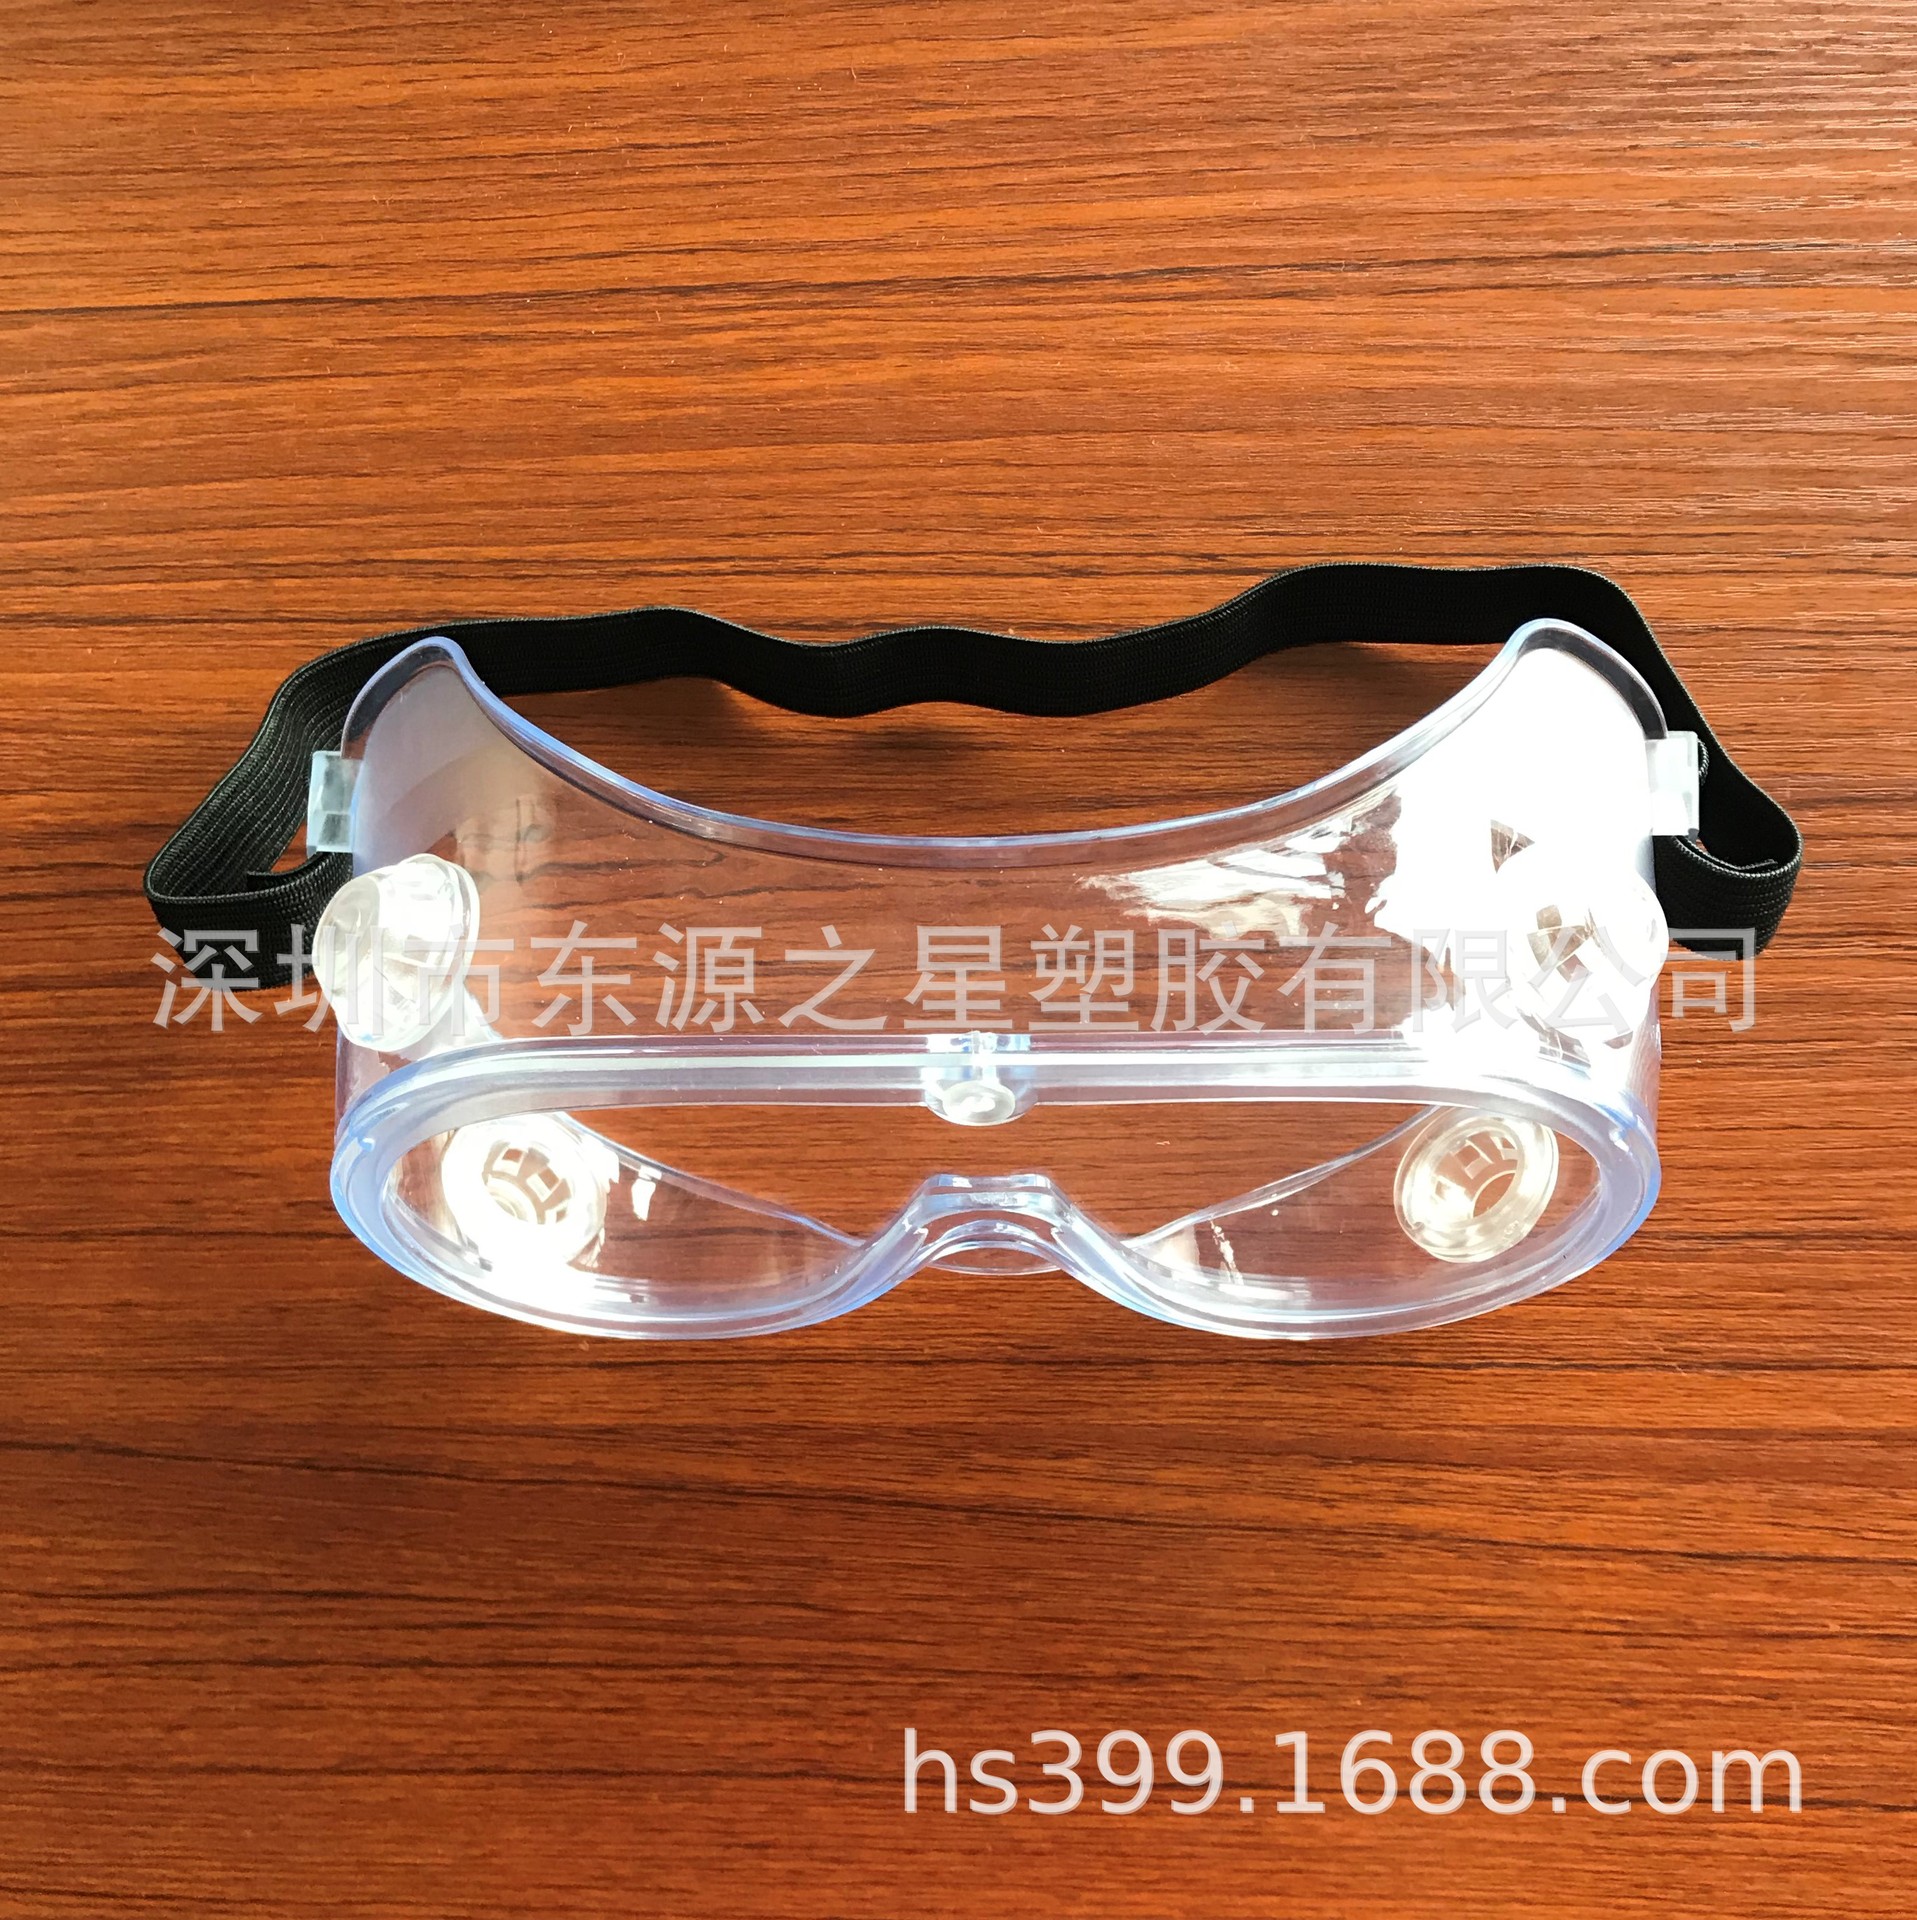 Goggles Protective glasses dustproof To attack Windbreak Fog Labor insurance glasses Chemistry Splash security glasses